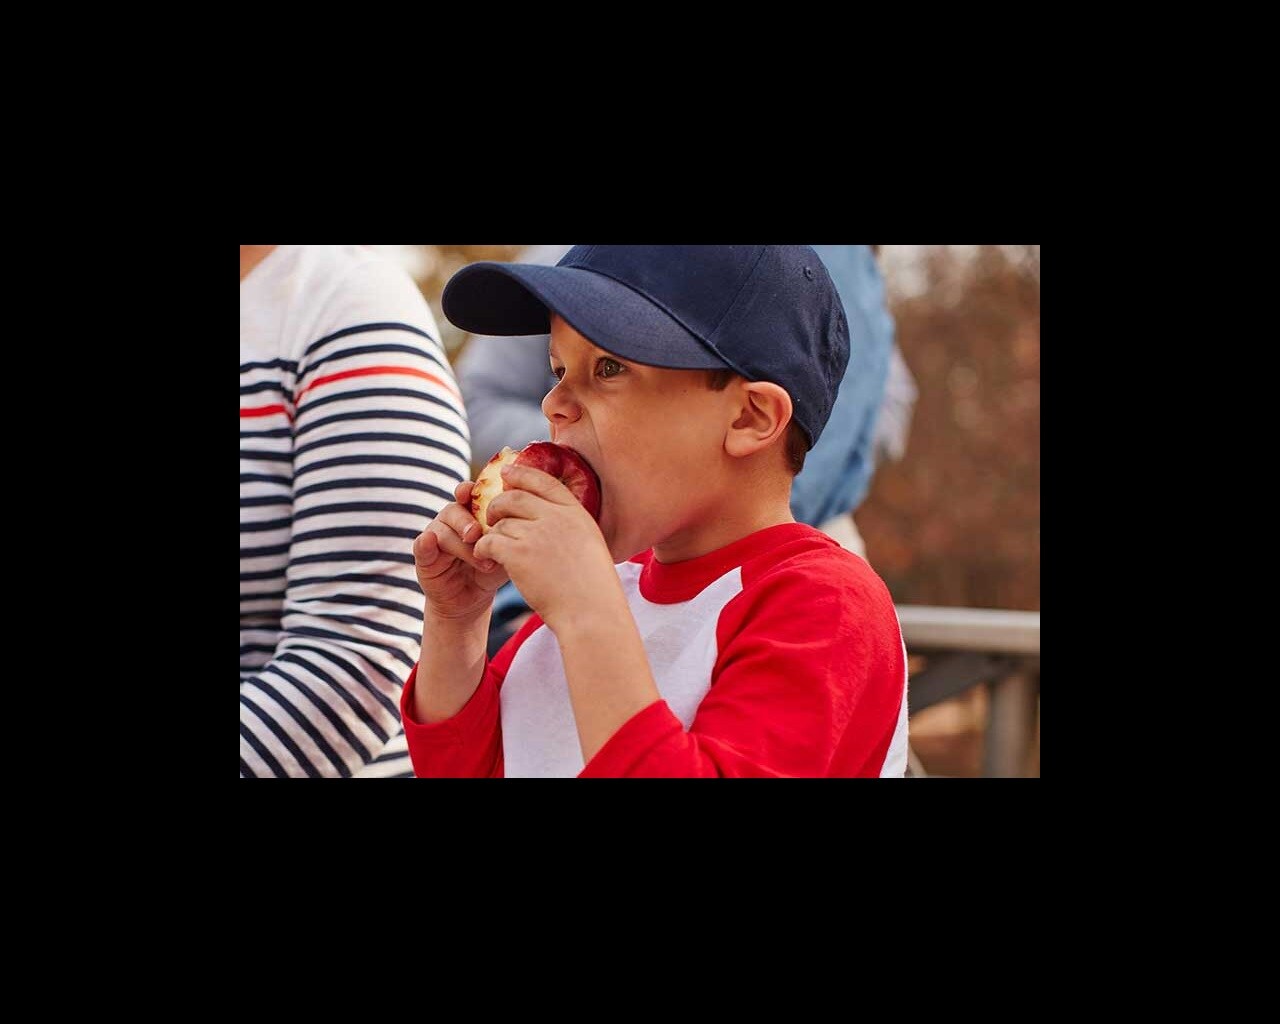 boy eating an apple at a baseball game